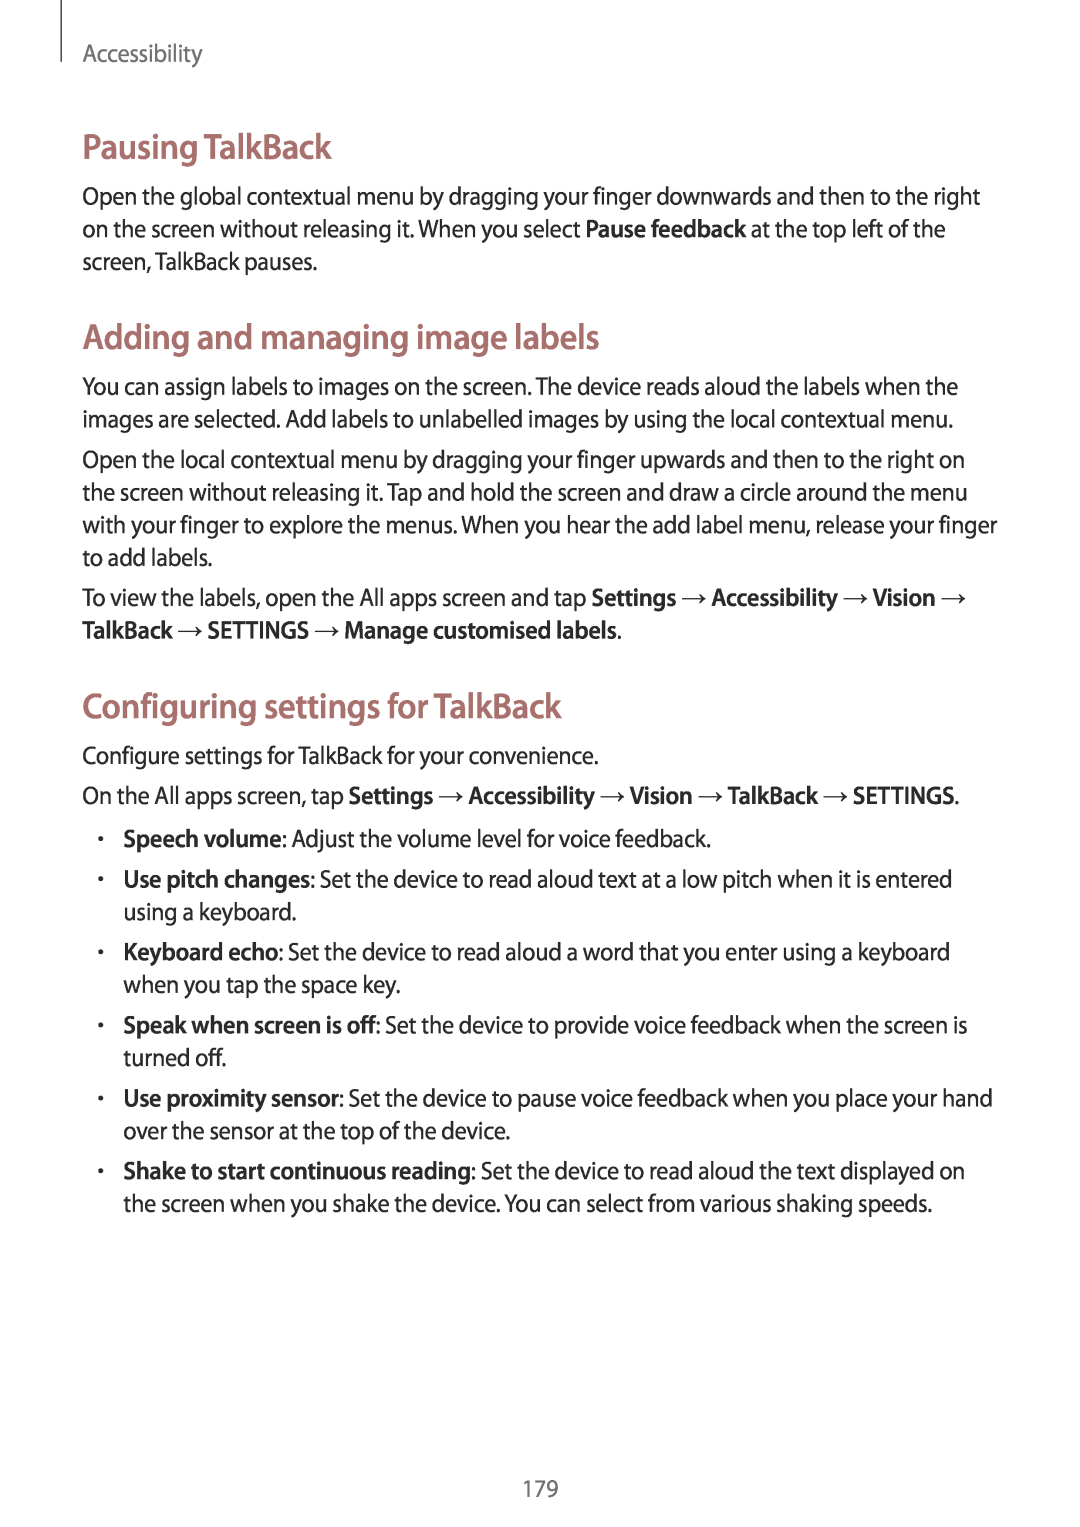 Samsung SM-N915FZKYETL manual Pausing TalkBack, Adding and managing image labels, Configuring settings for TalkBack 